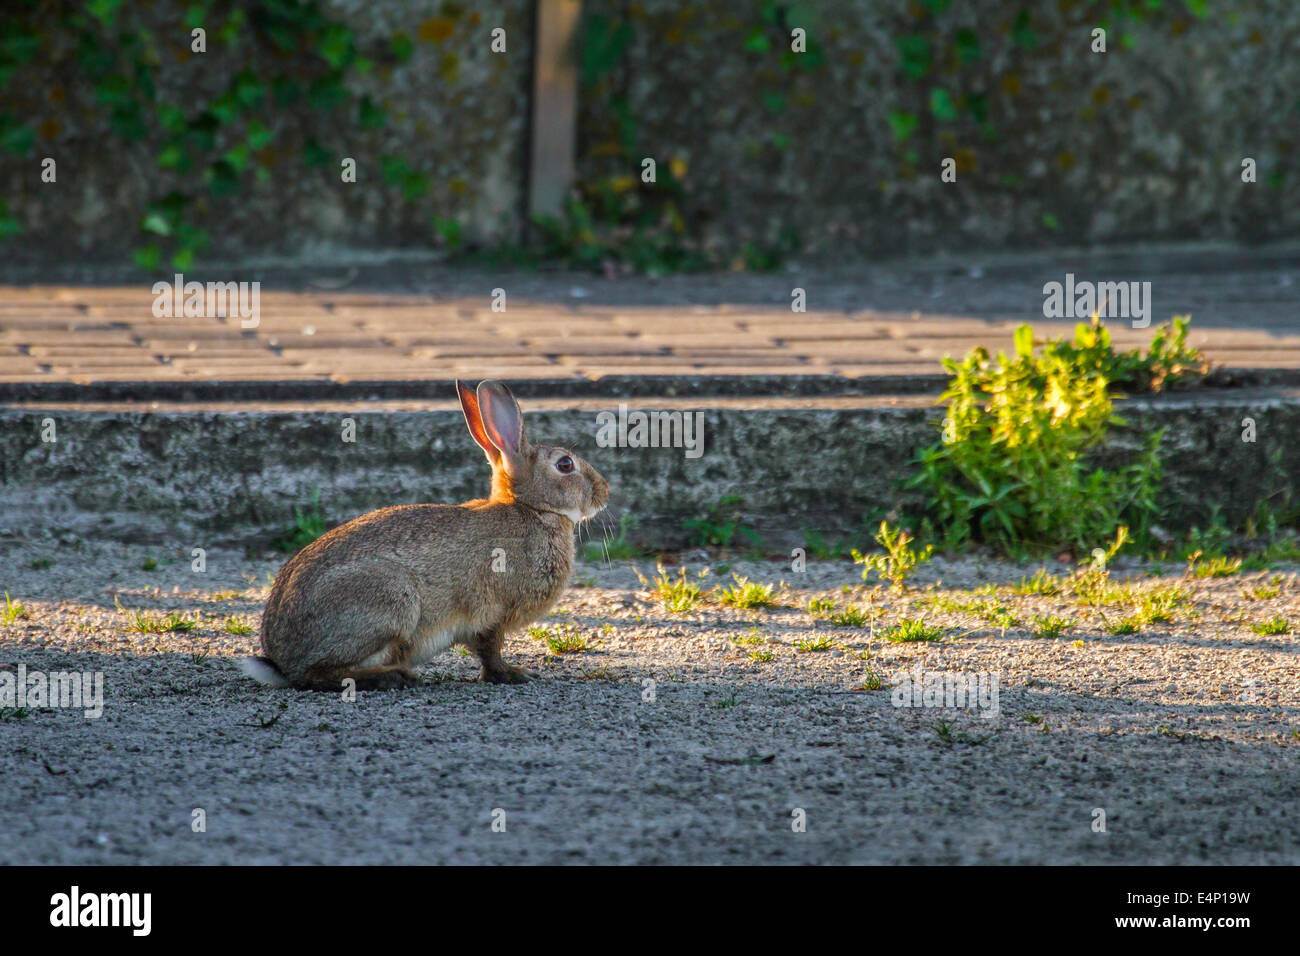 European rabbit / common rabbit (Oryctolagus cuniculus) sitting in the street Stock Photo